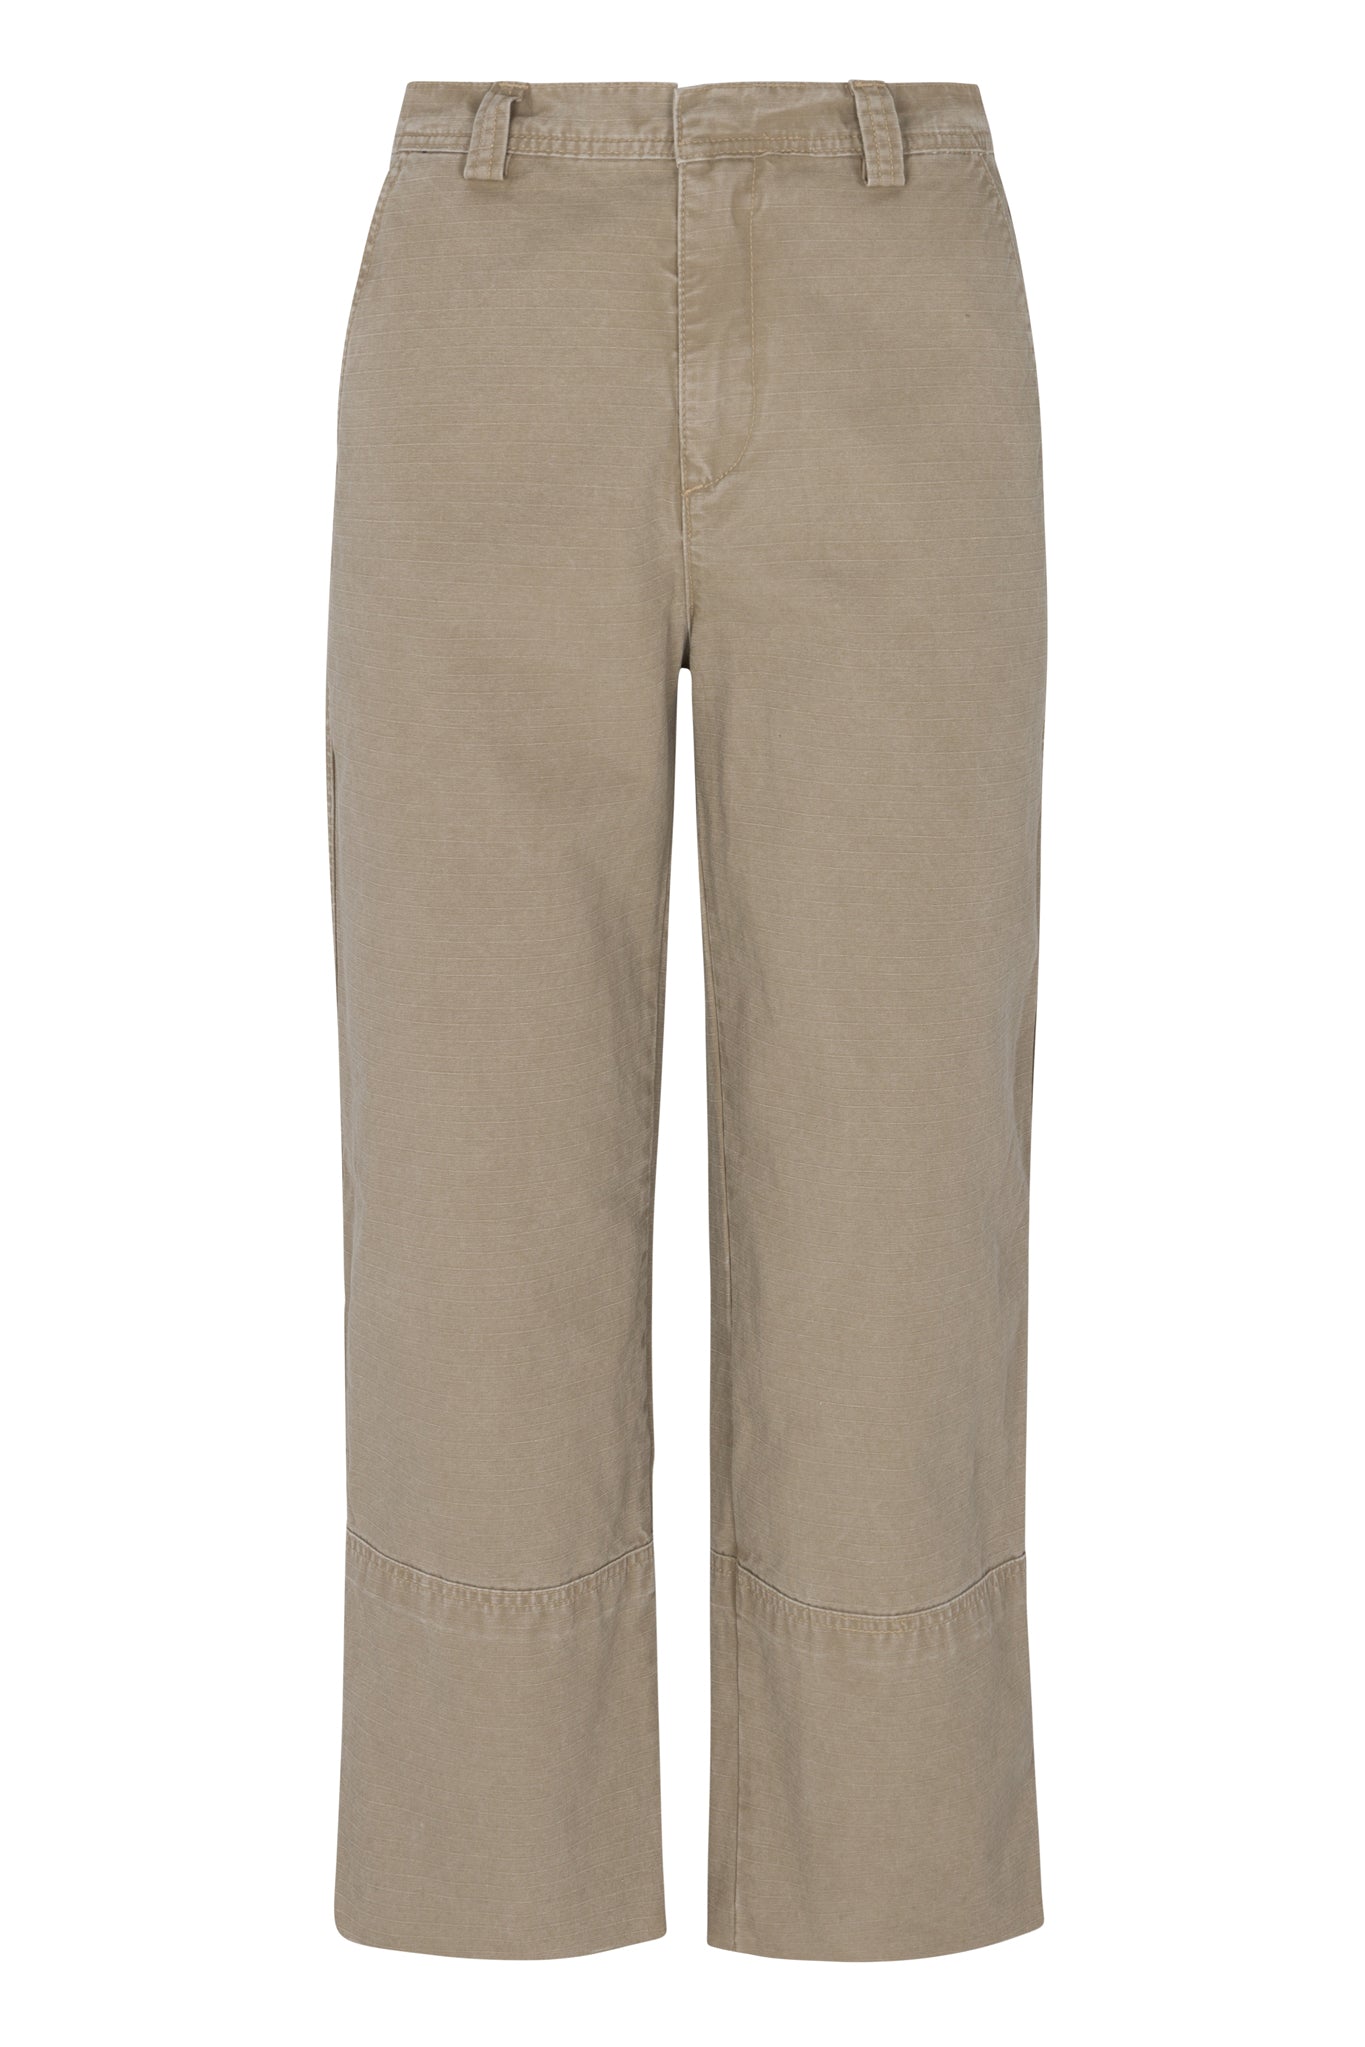 Khaki Classic Cotton Pants